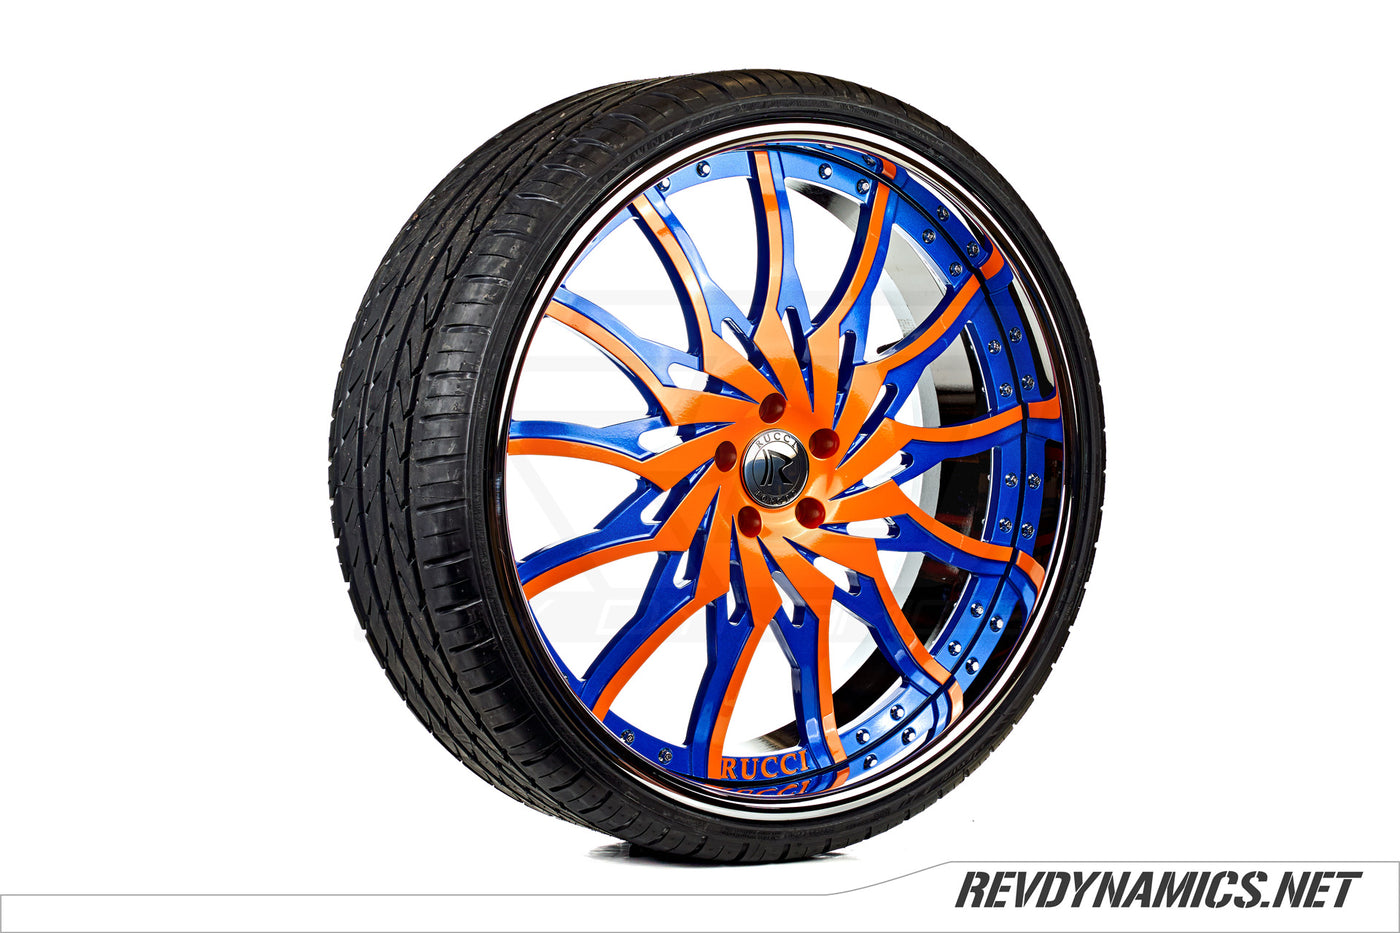 Rucci Dusse 24" Wheel in Stealth Blue and Sunrise Orange 